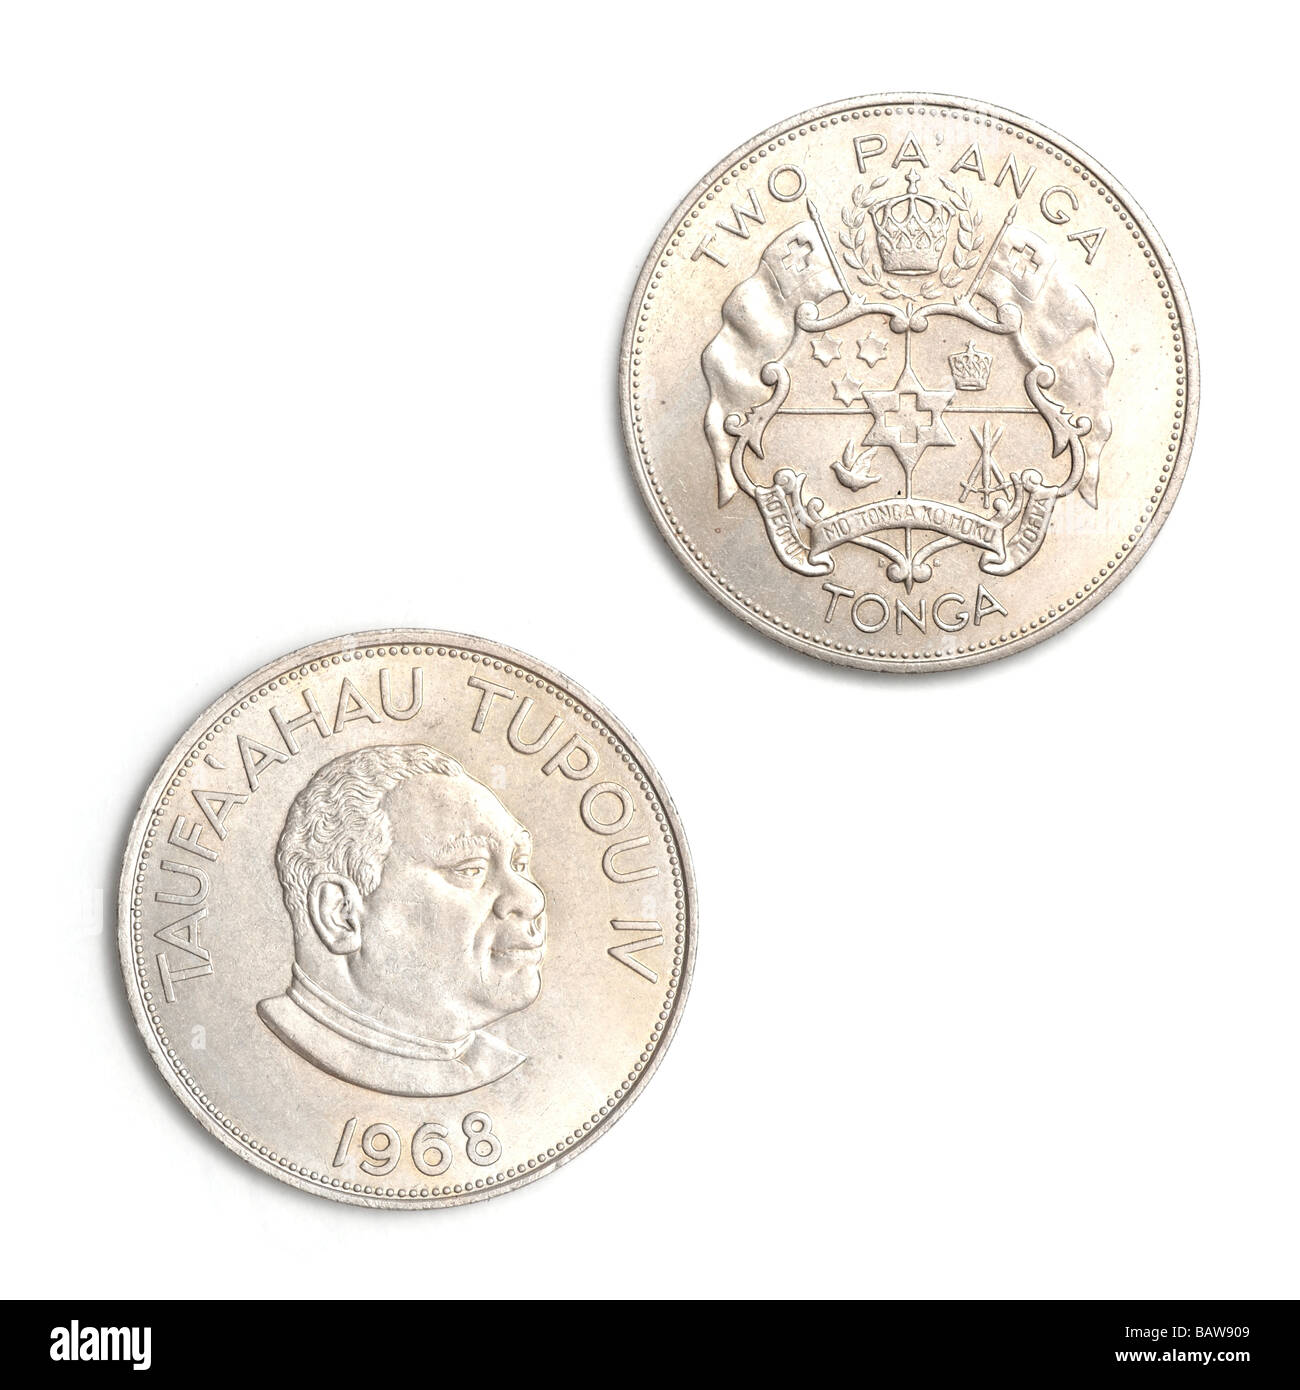 Tongan Two Pa'anga Coin Stock Photo